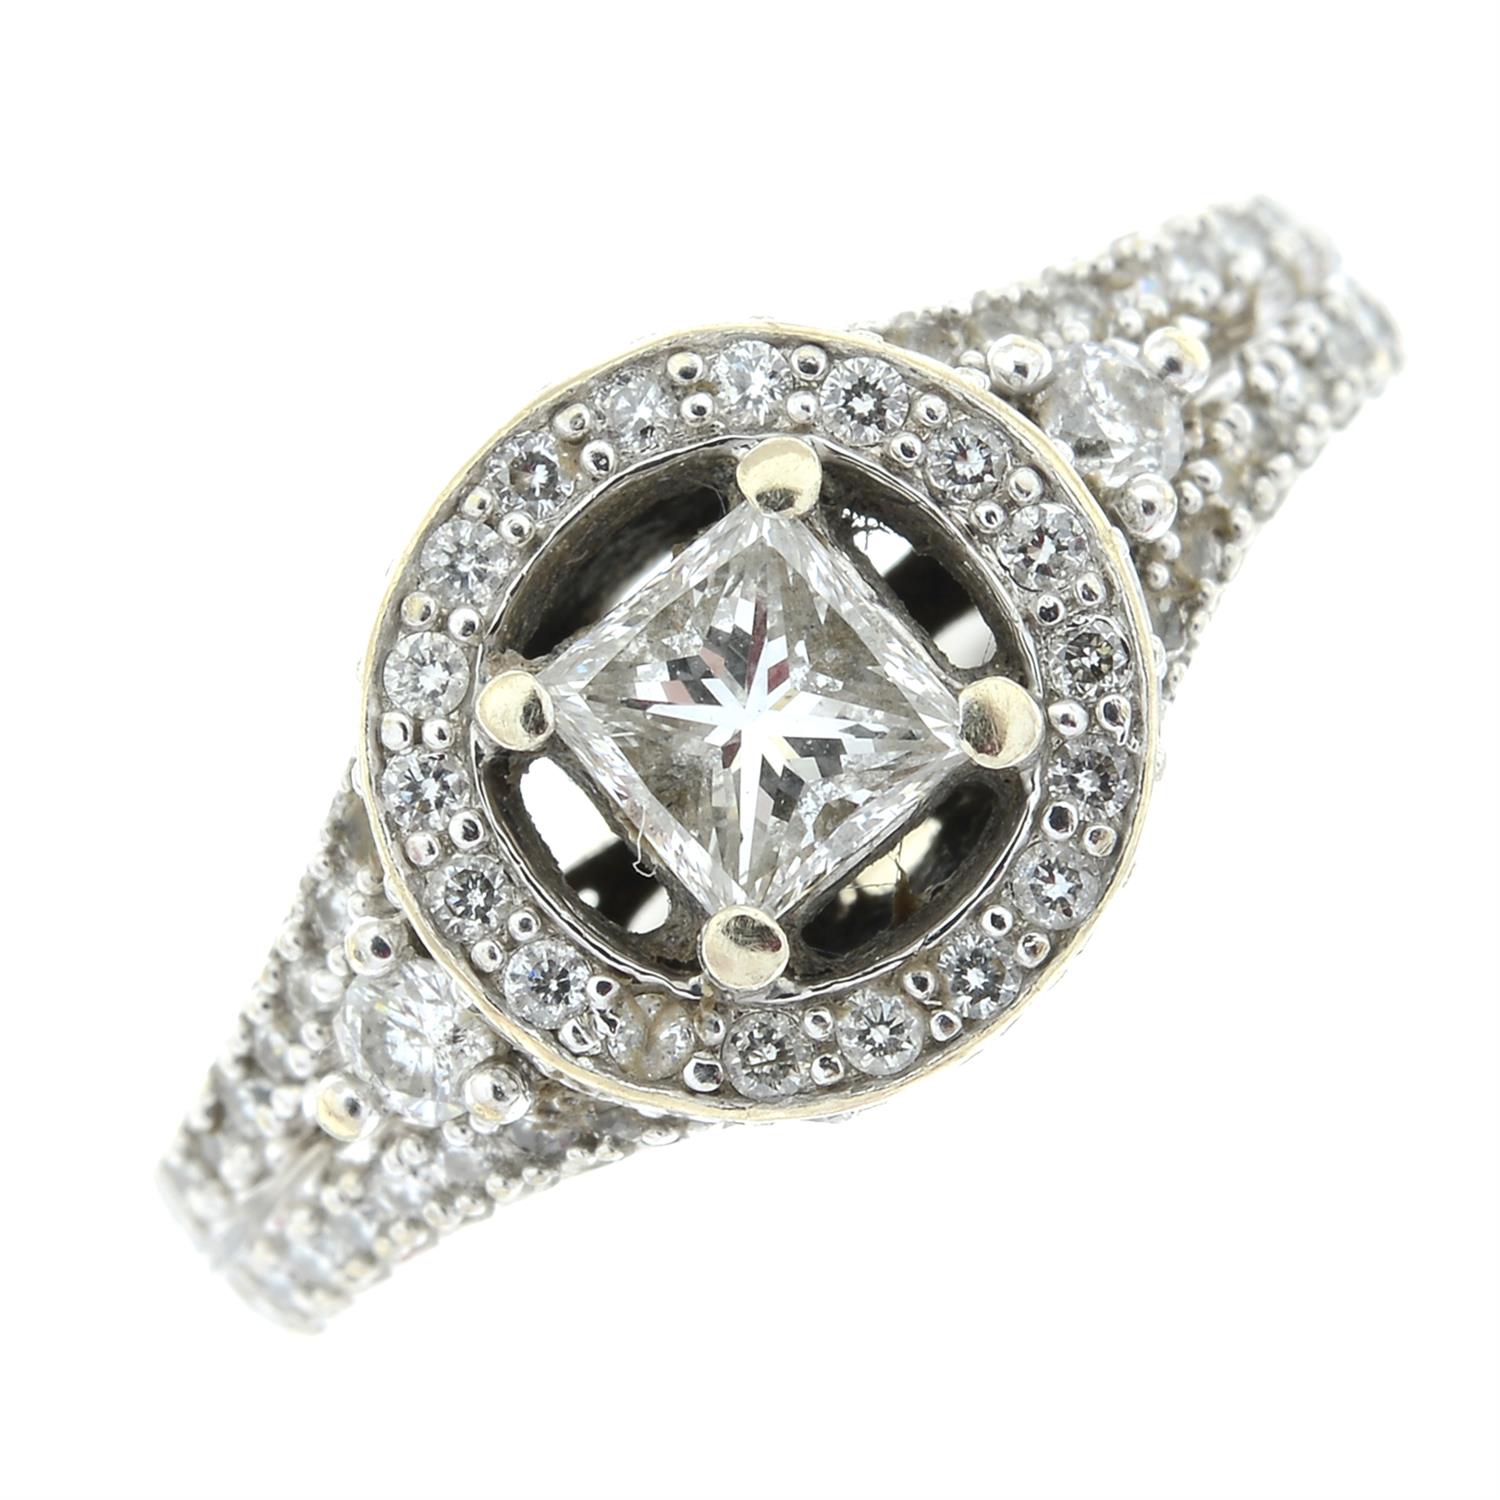 A square-shape diamond ring, with brilliant-cut diamond shoulders.